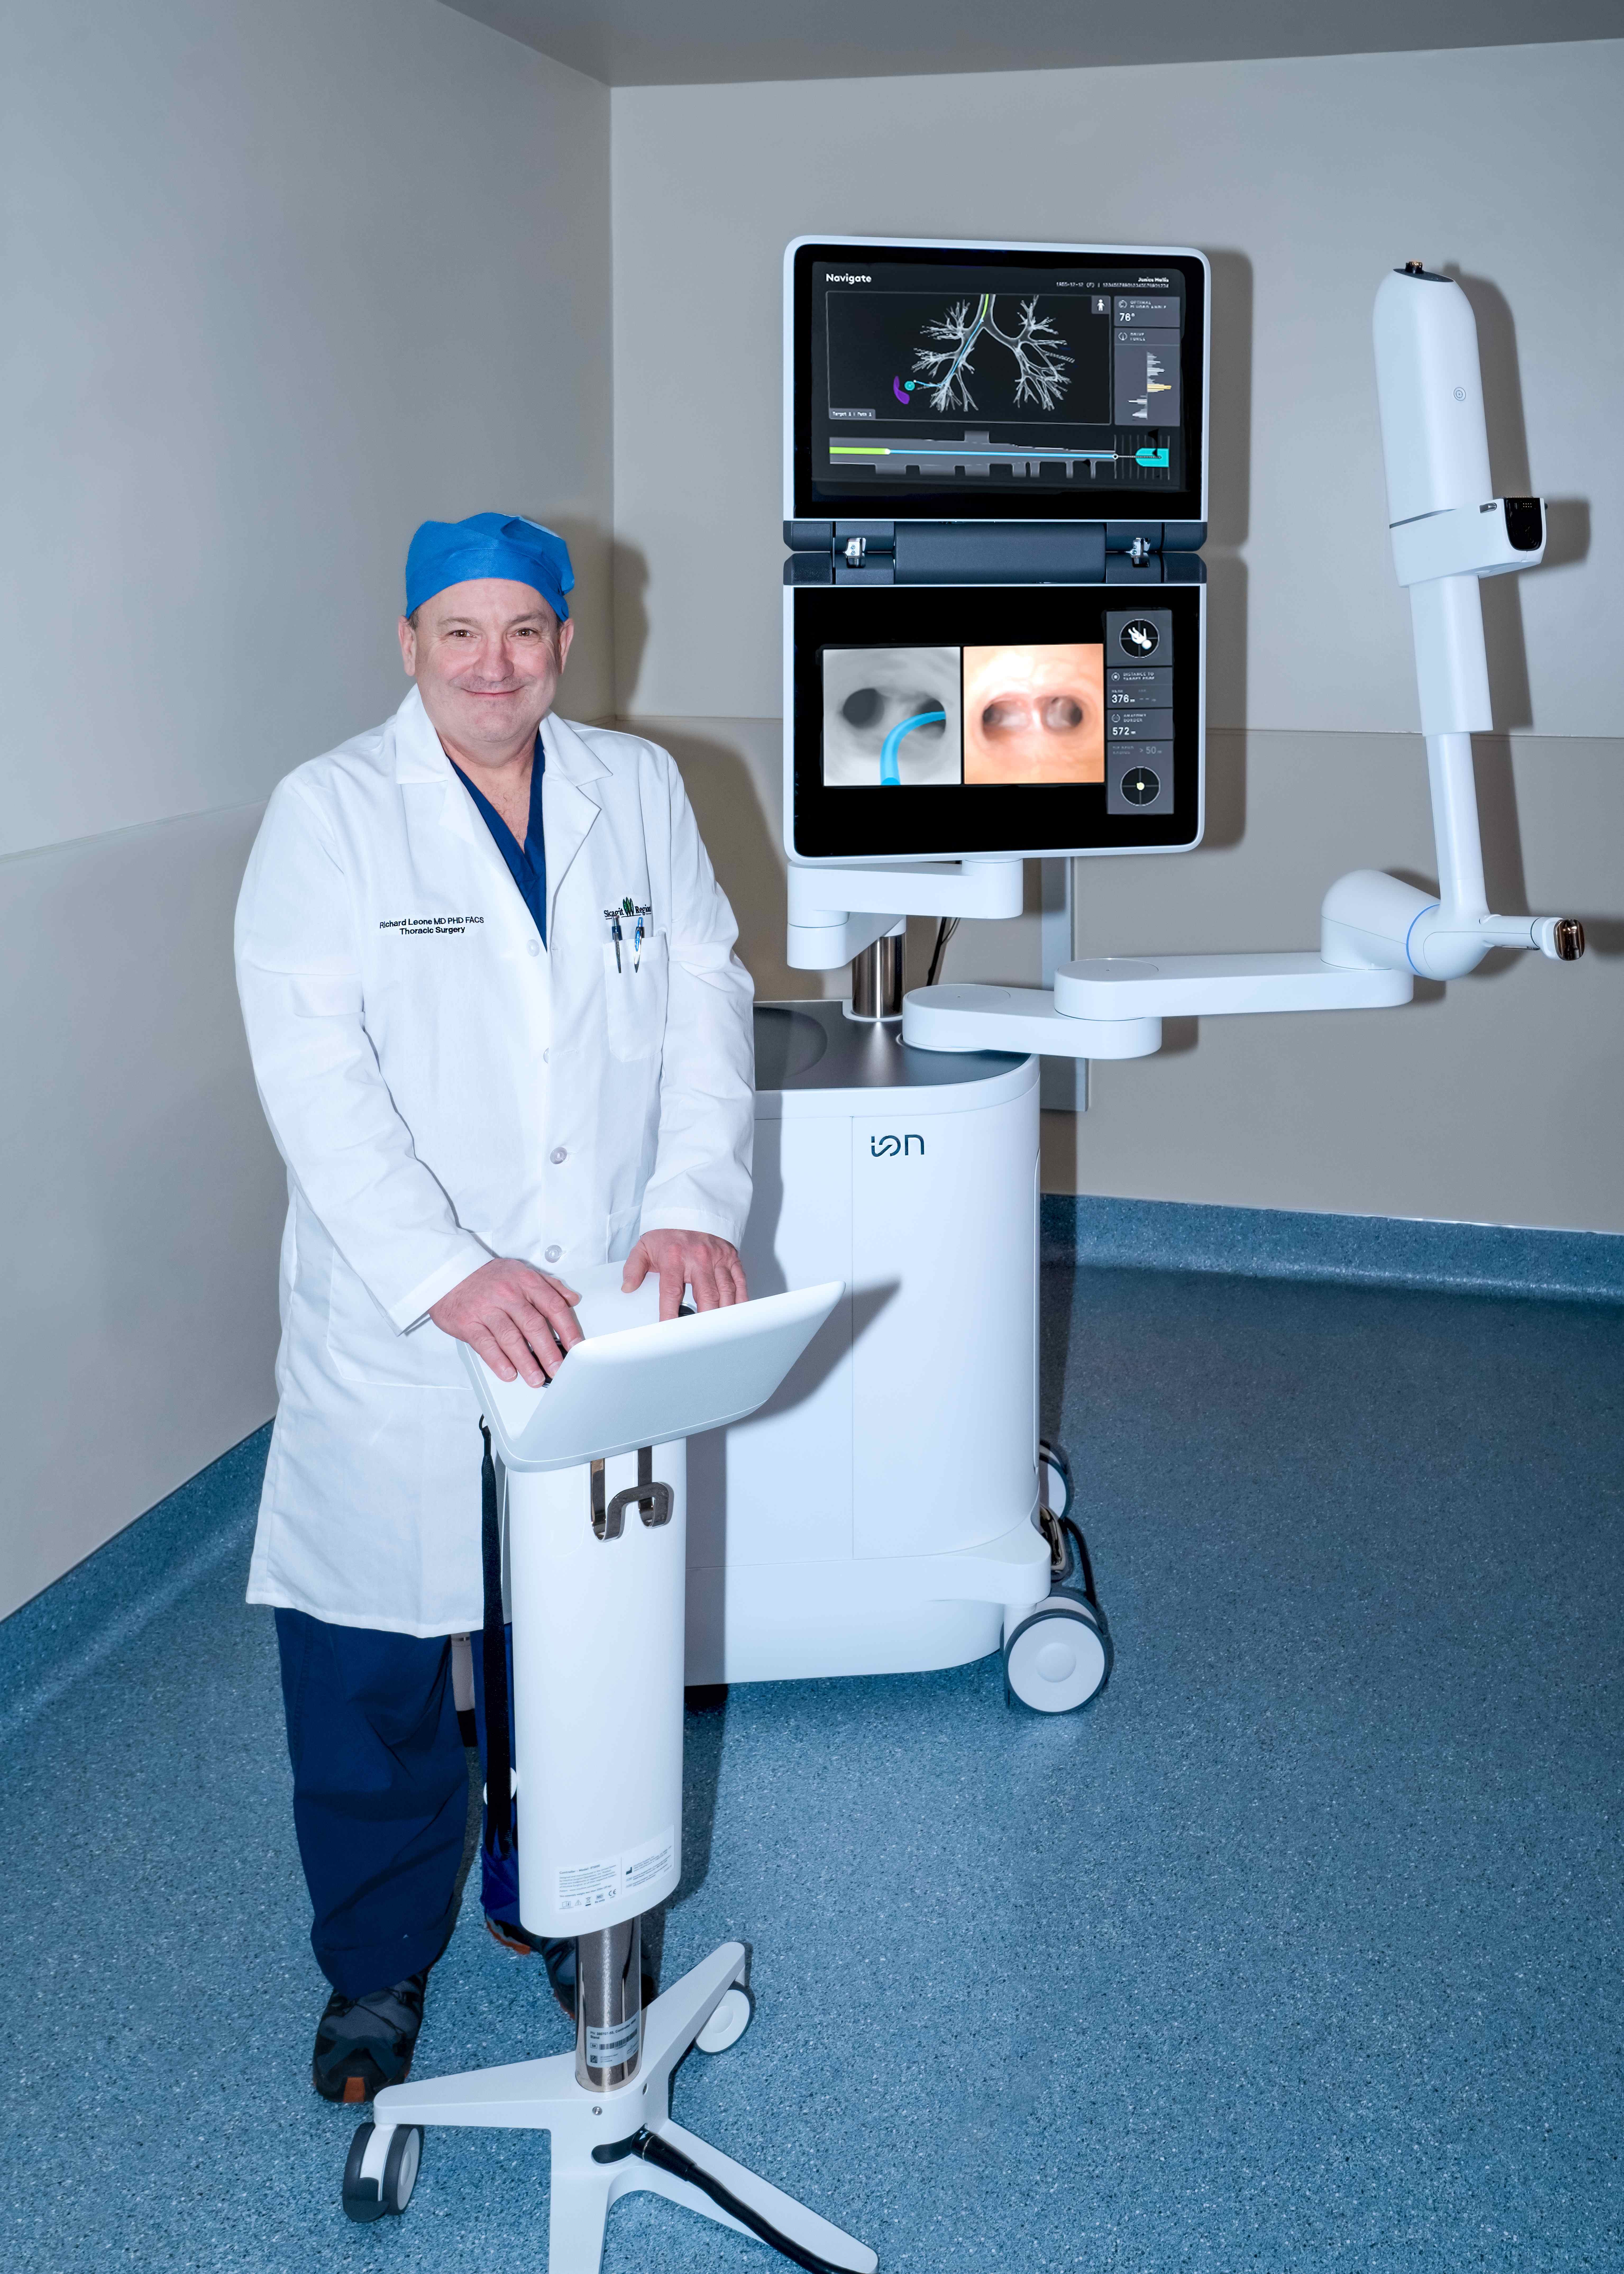 Cirujano junto a un robot quirúrgico